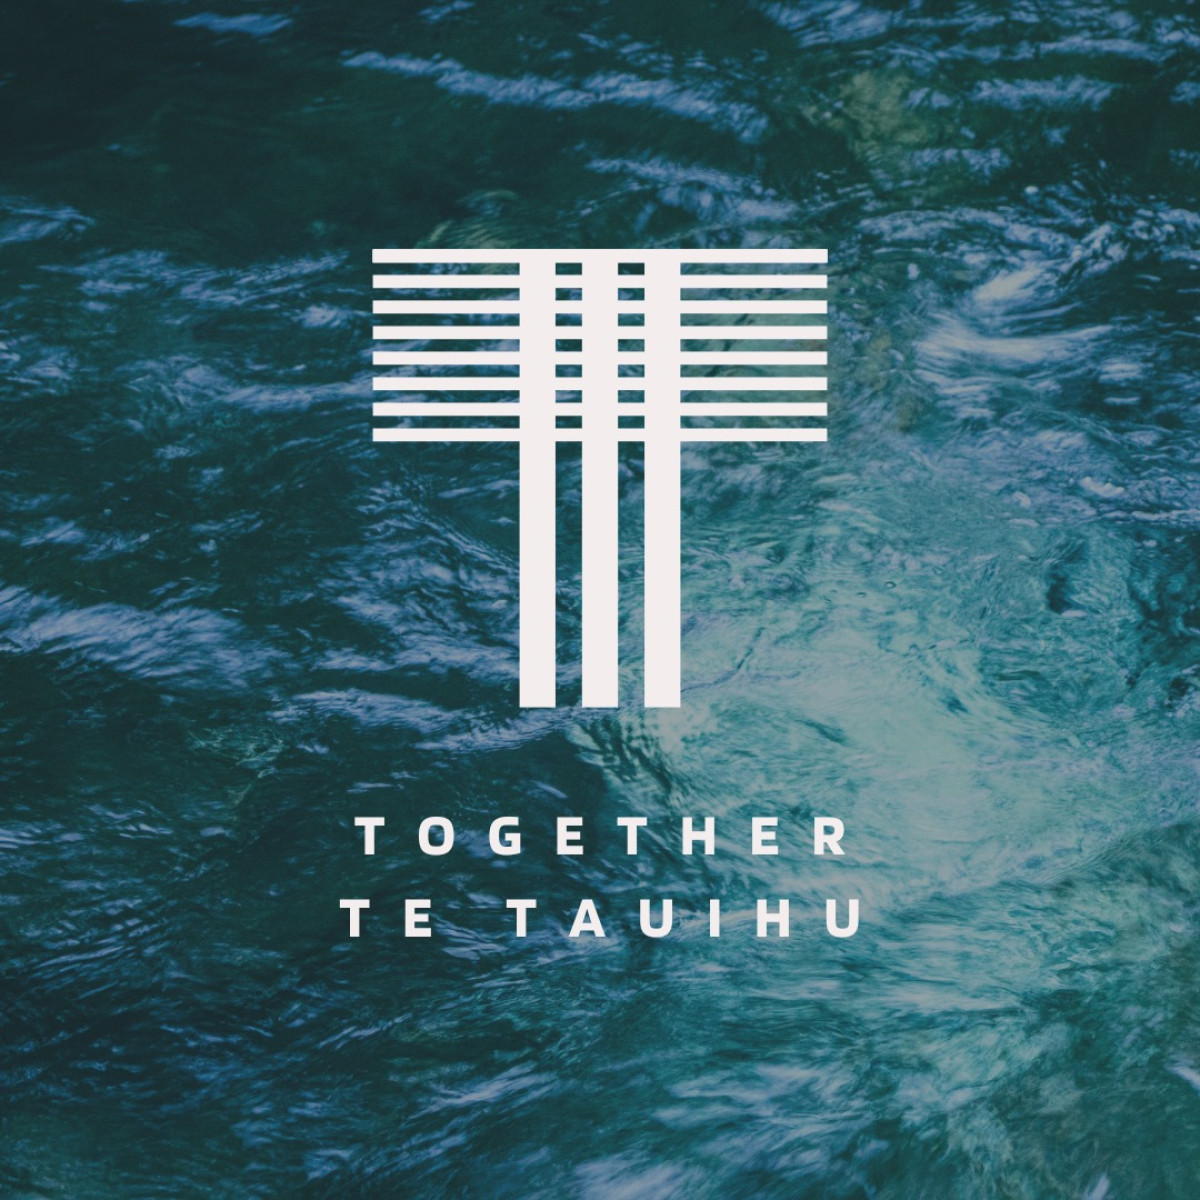 Te Tauihu, councils sign historic partnership agreement 